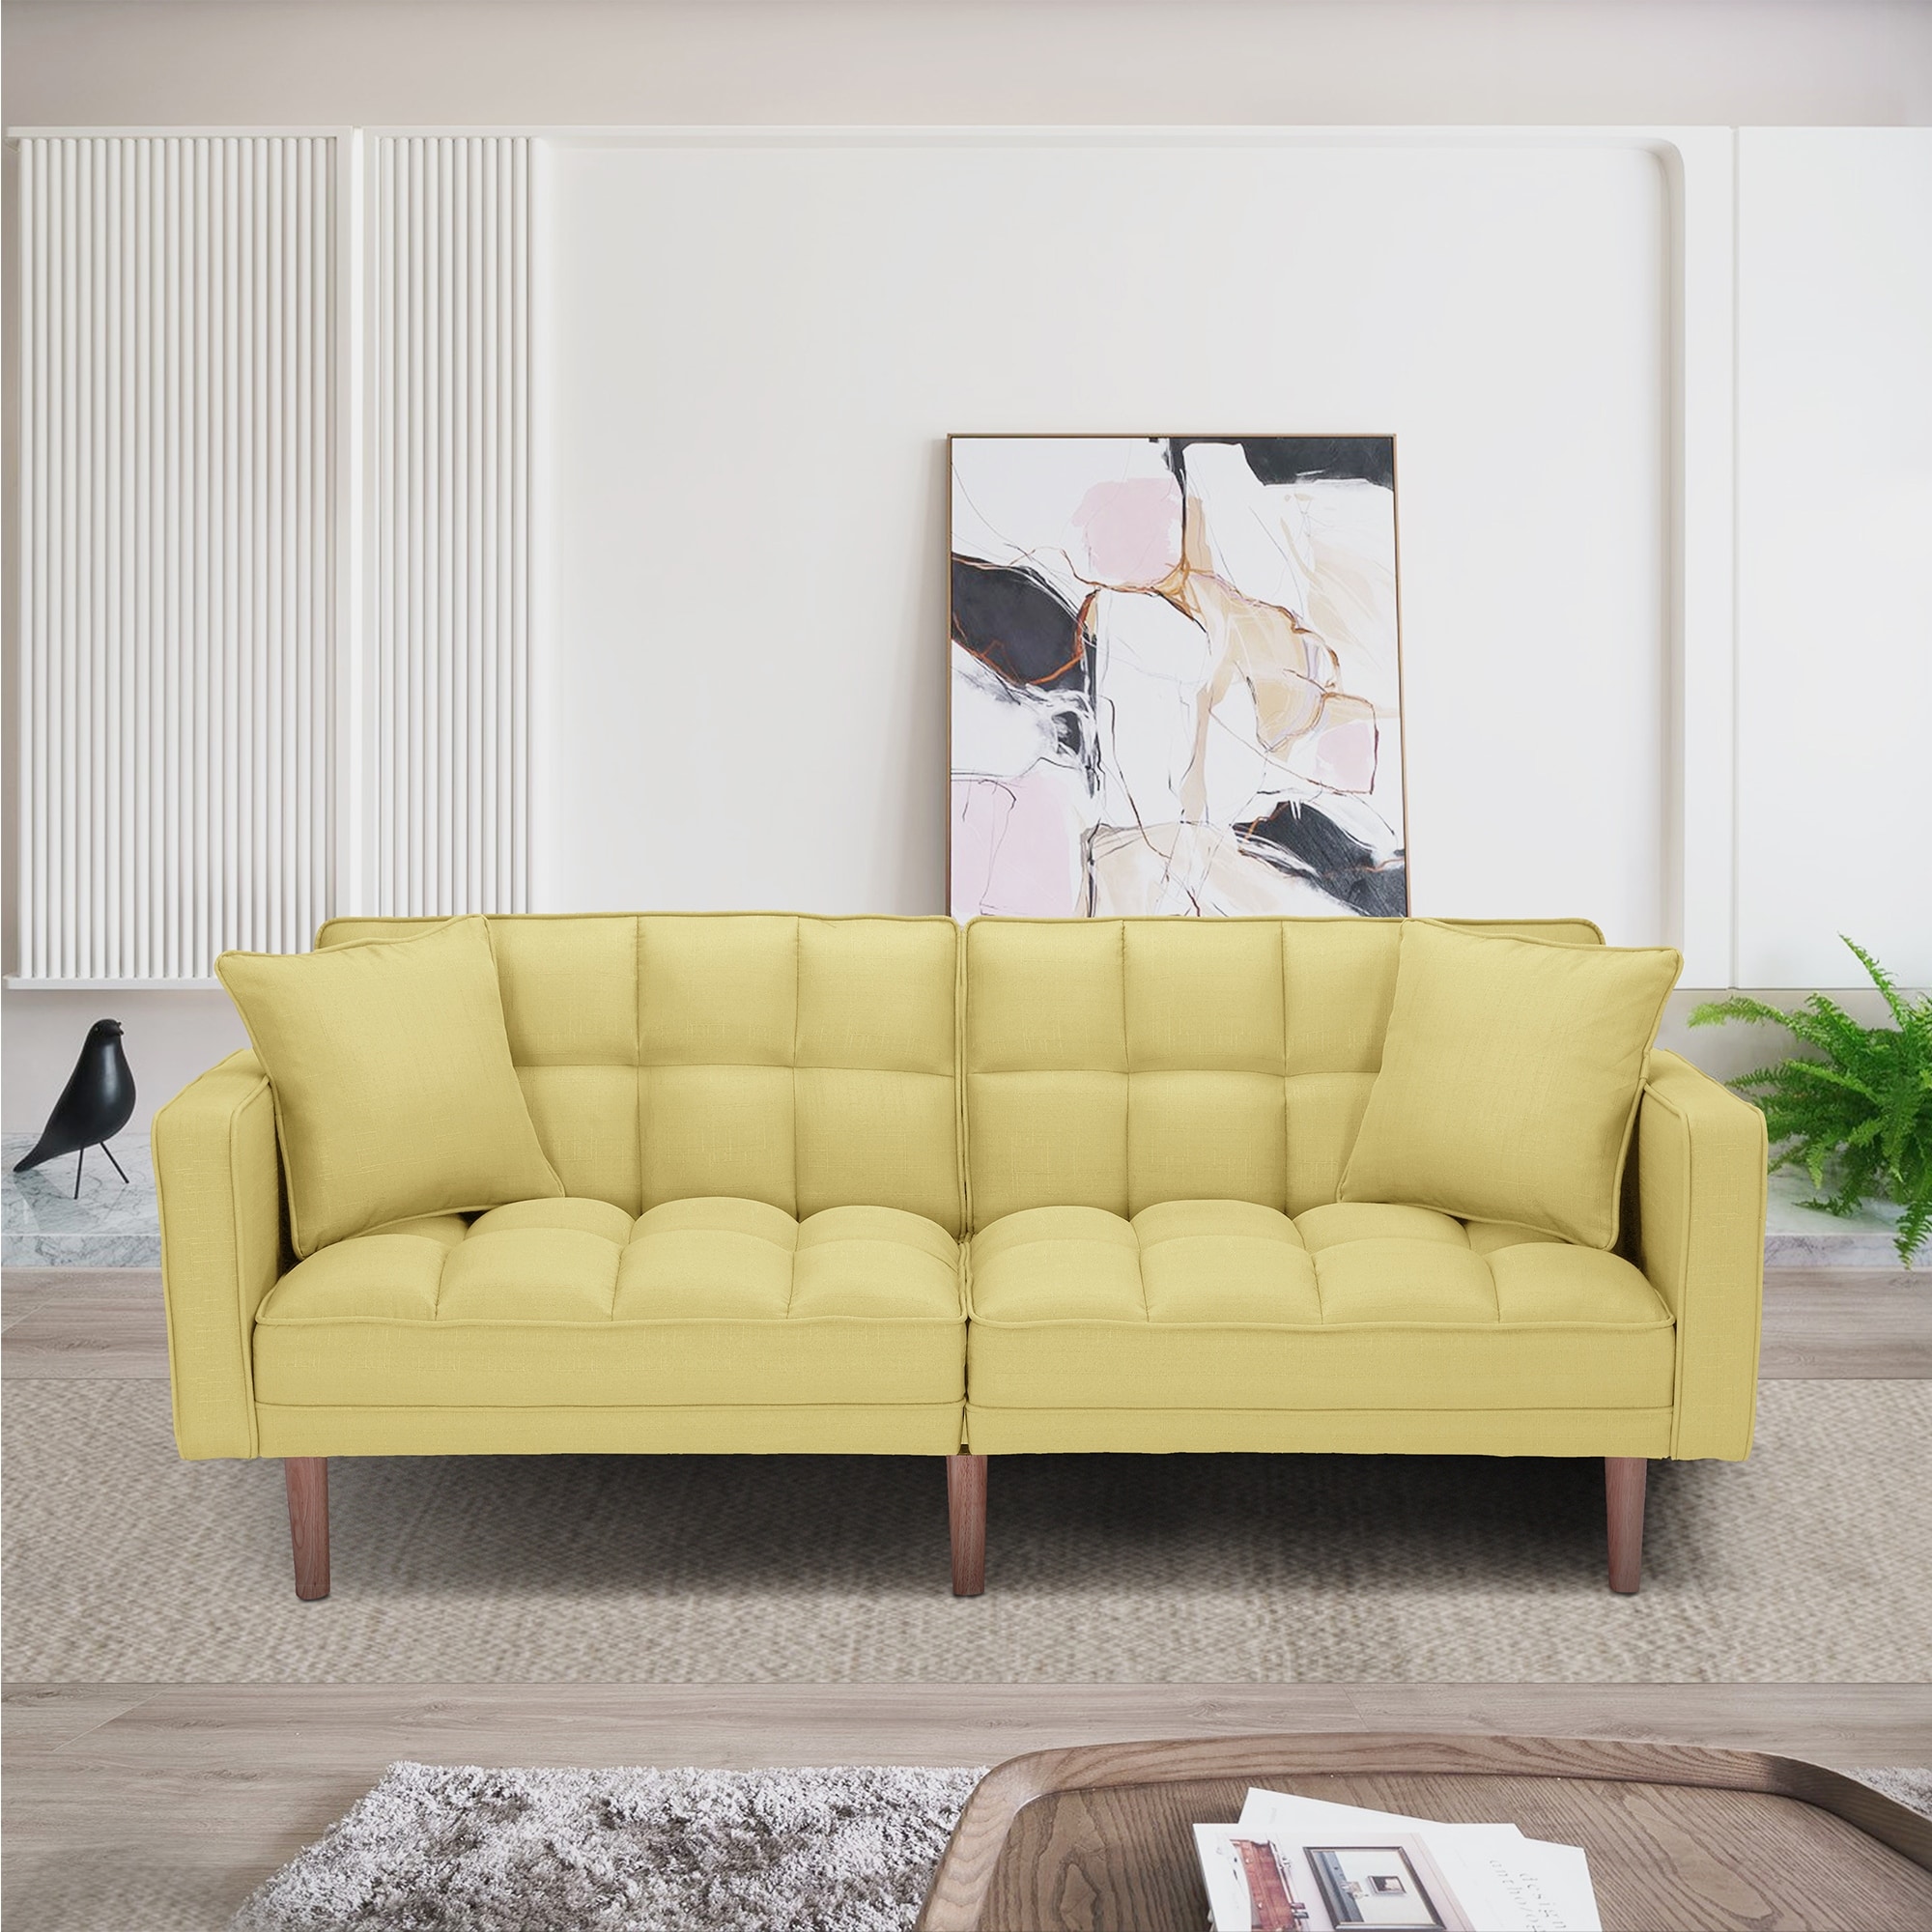 Global Pronex Fabric Sofa Futon Deep Seat Sleeper Sofa in Yellow with Pillows